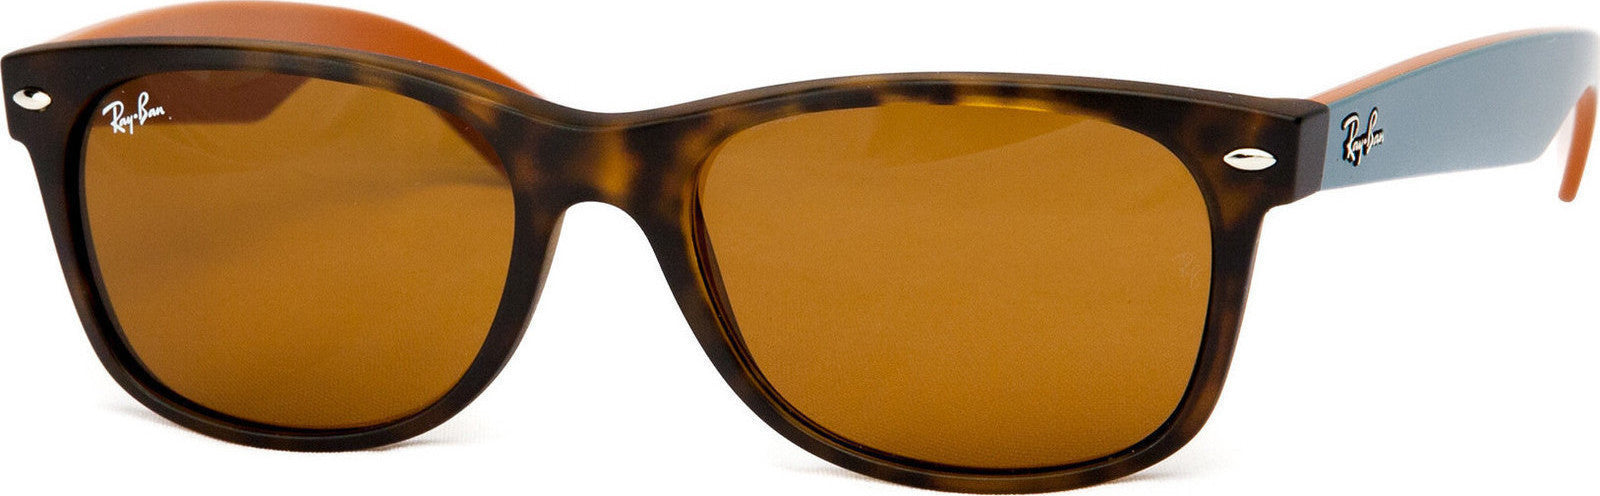 Ray Ban New Wayfarer Bicolor Matte Havana Sunglasses Flight Sunglasses